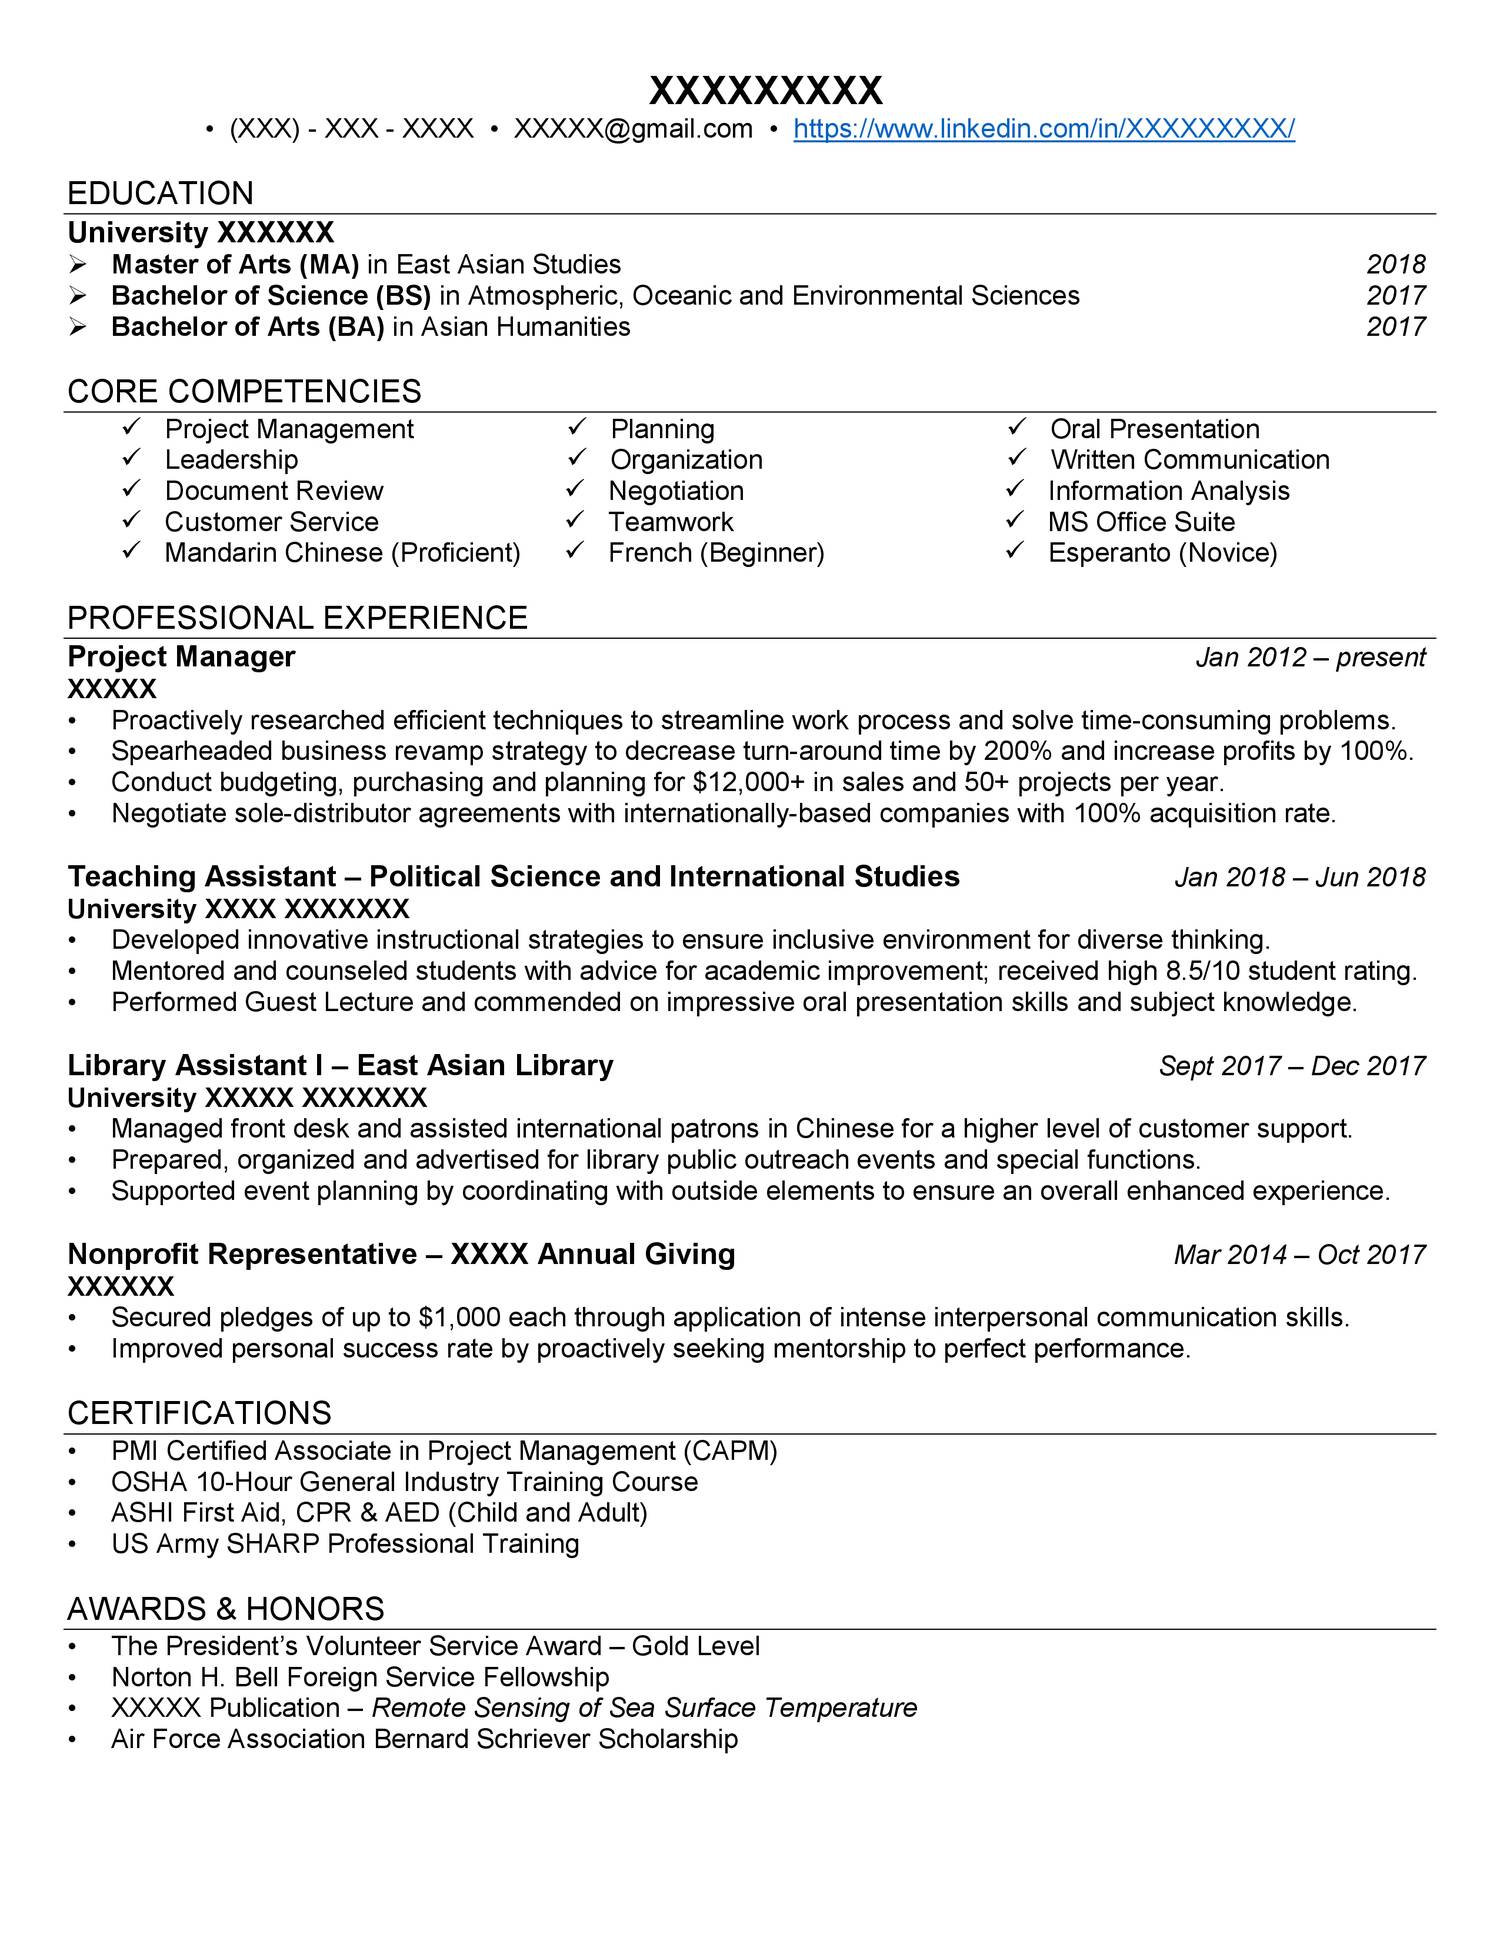 trash resume.pdf | DocDroid